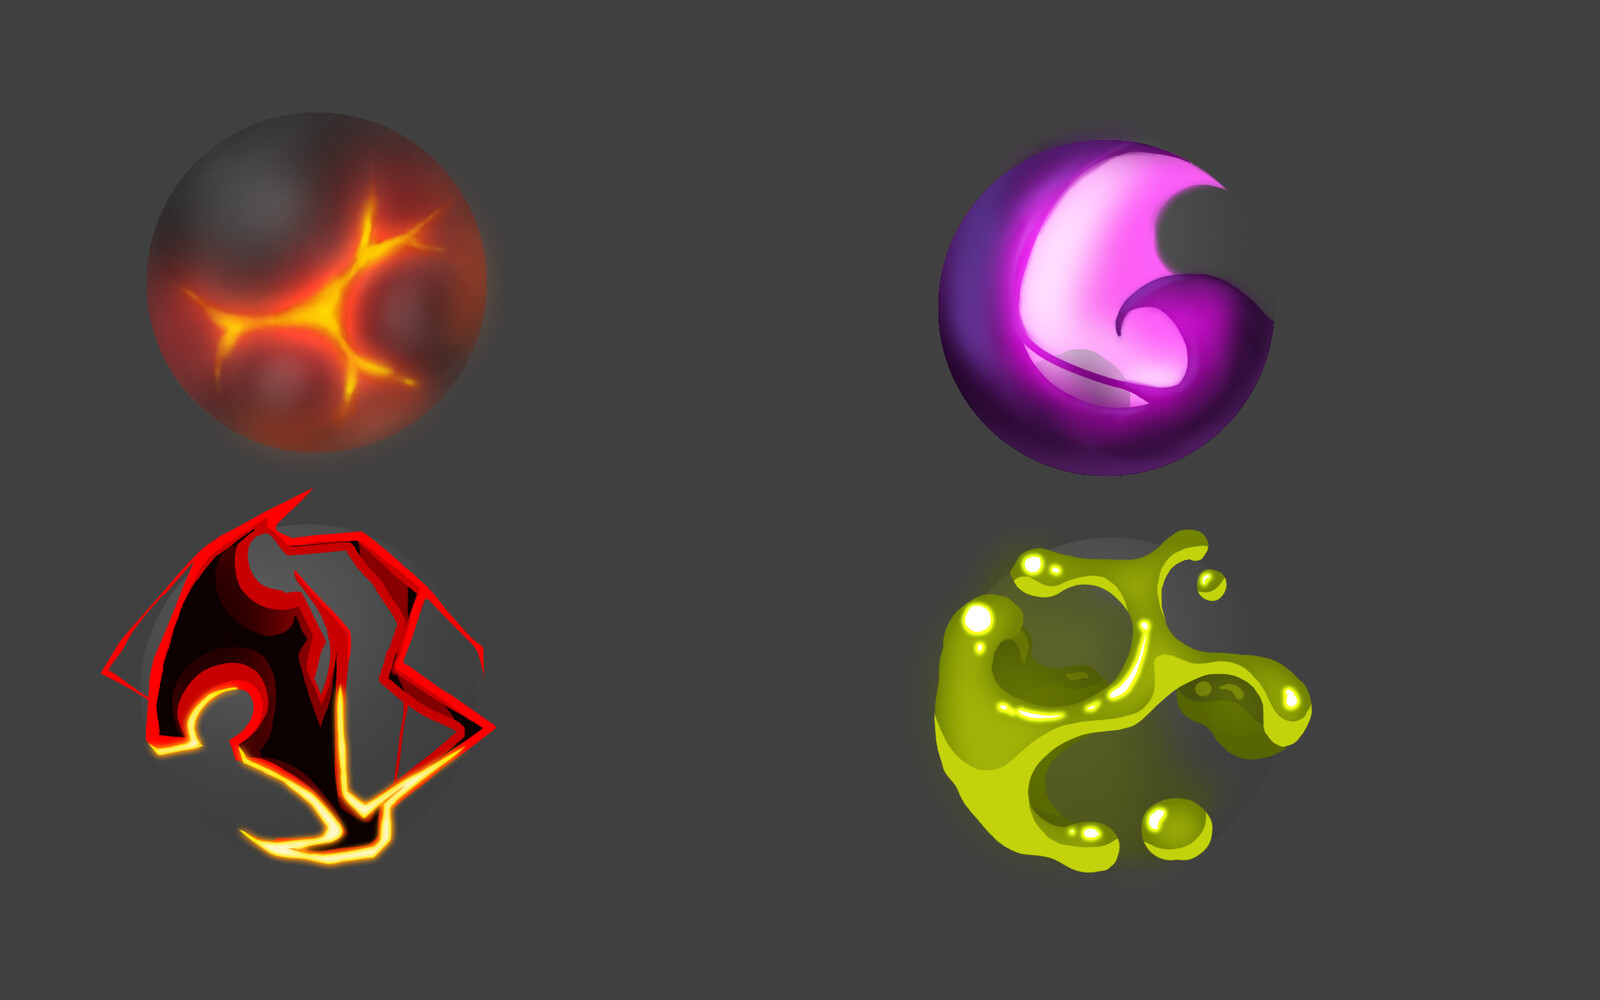 Different elemental spheres